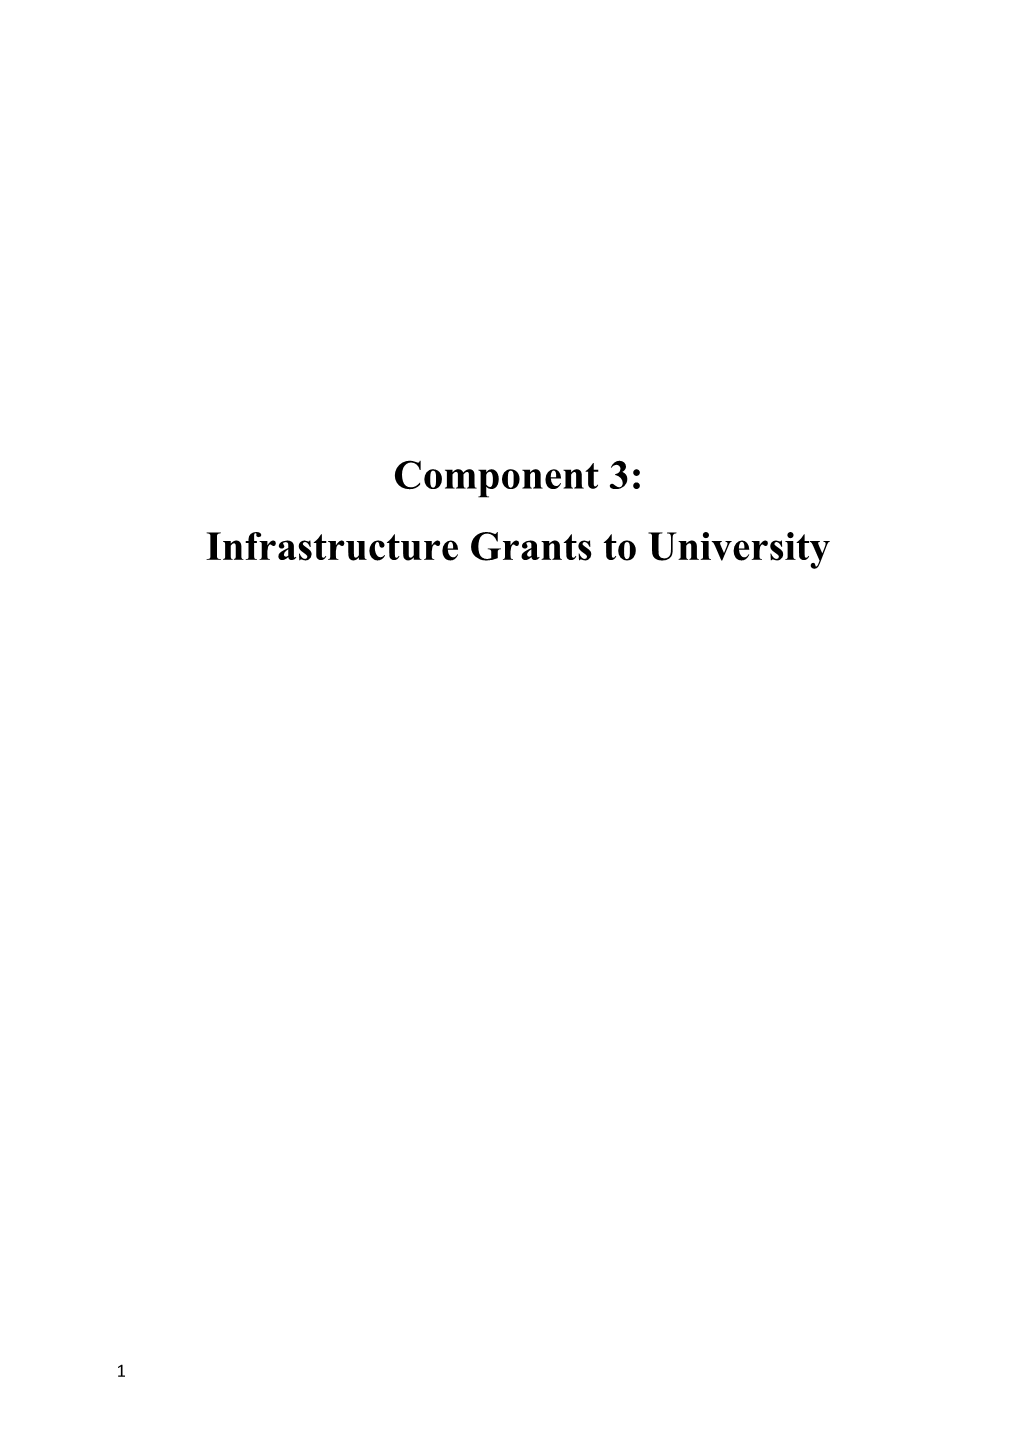 Infrastructure Grants to University